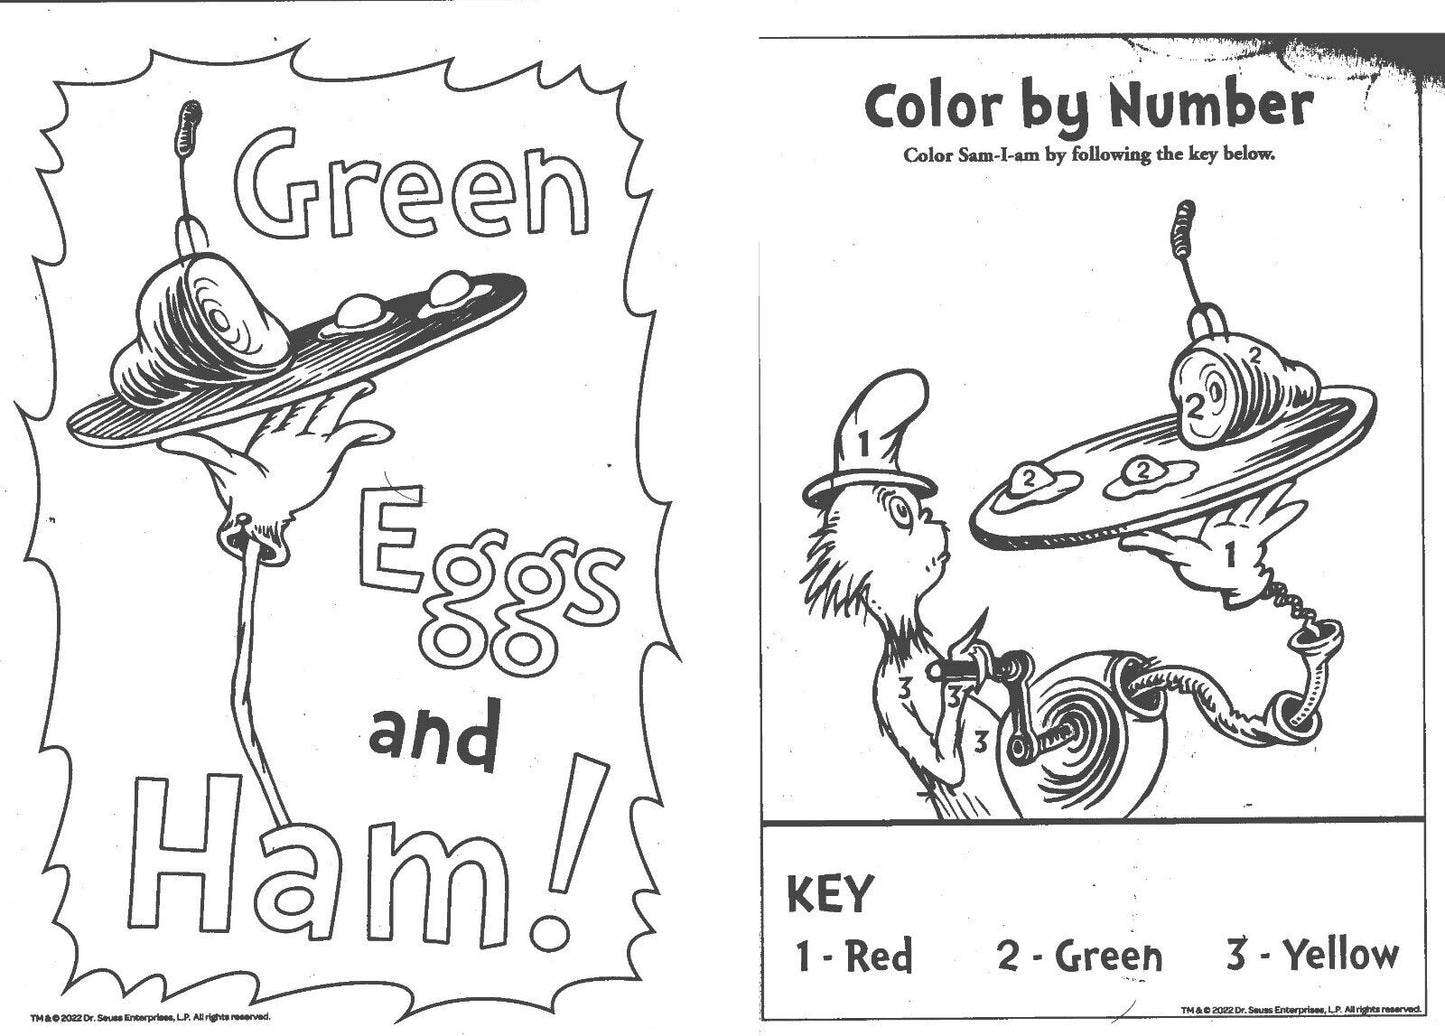 Dr. Seuss - Coloring & Activity Book (Set of 4 Books)